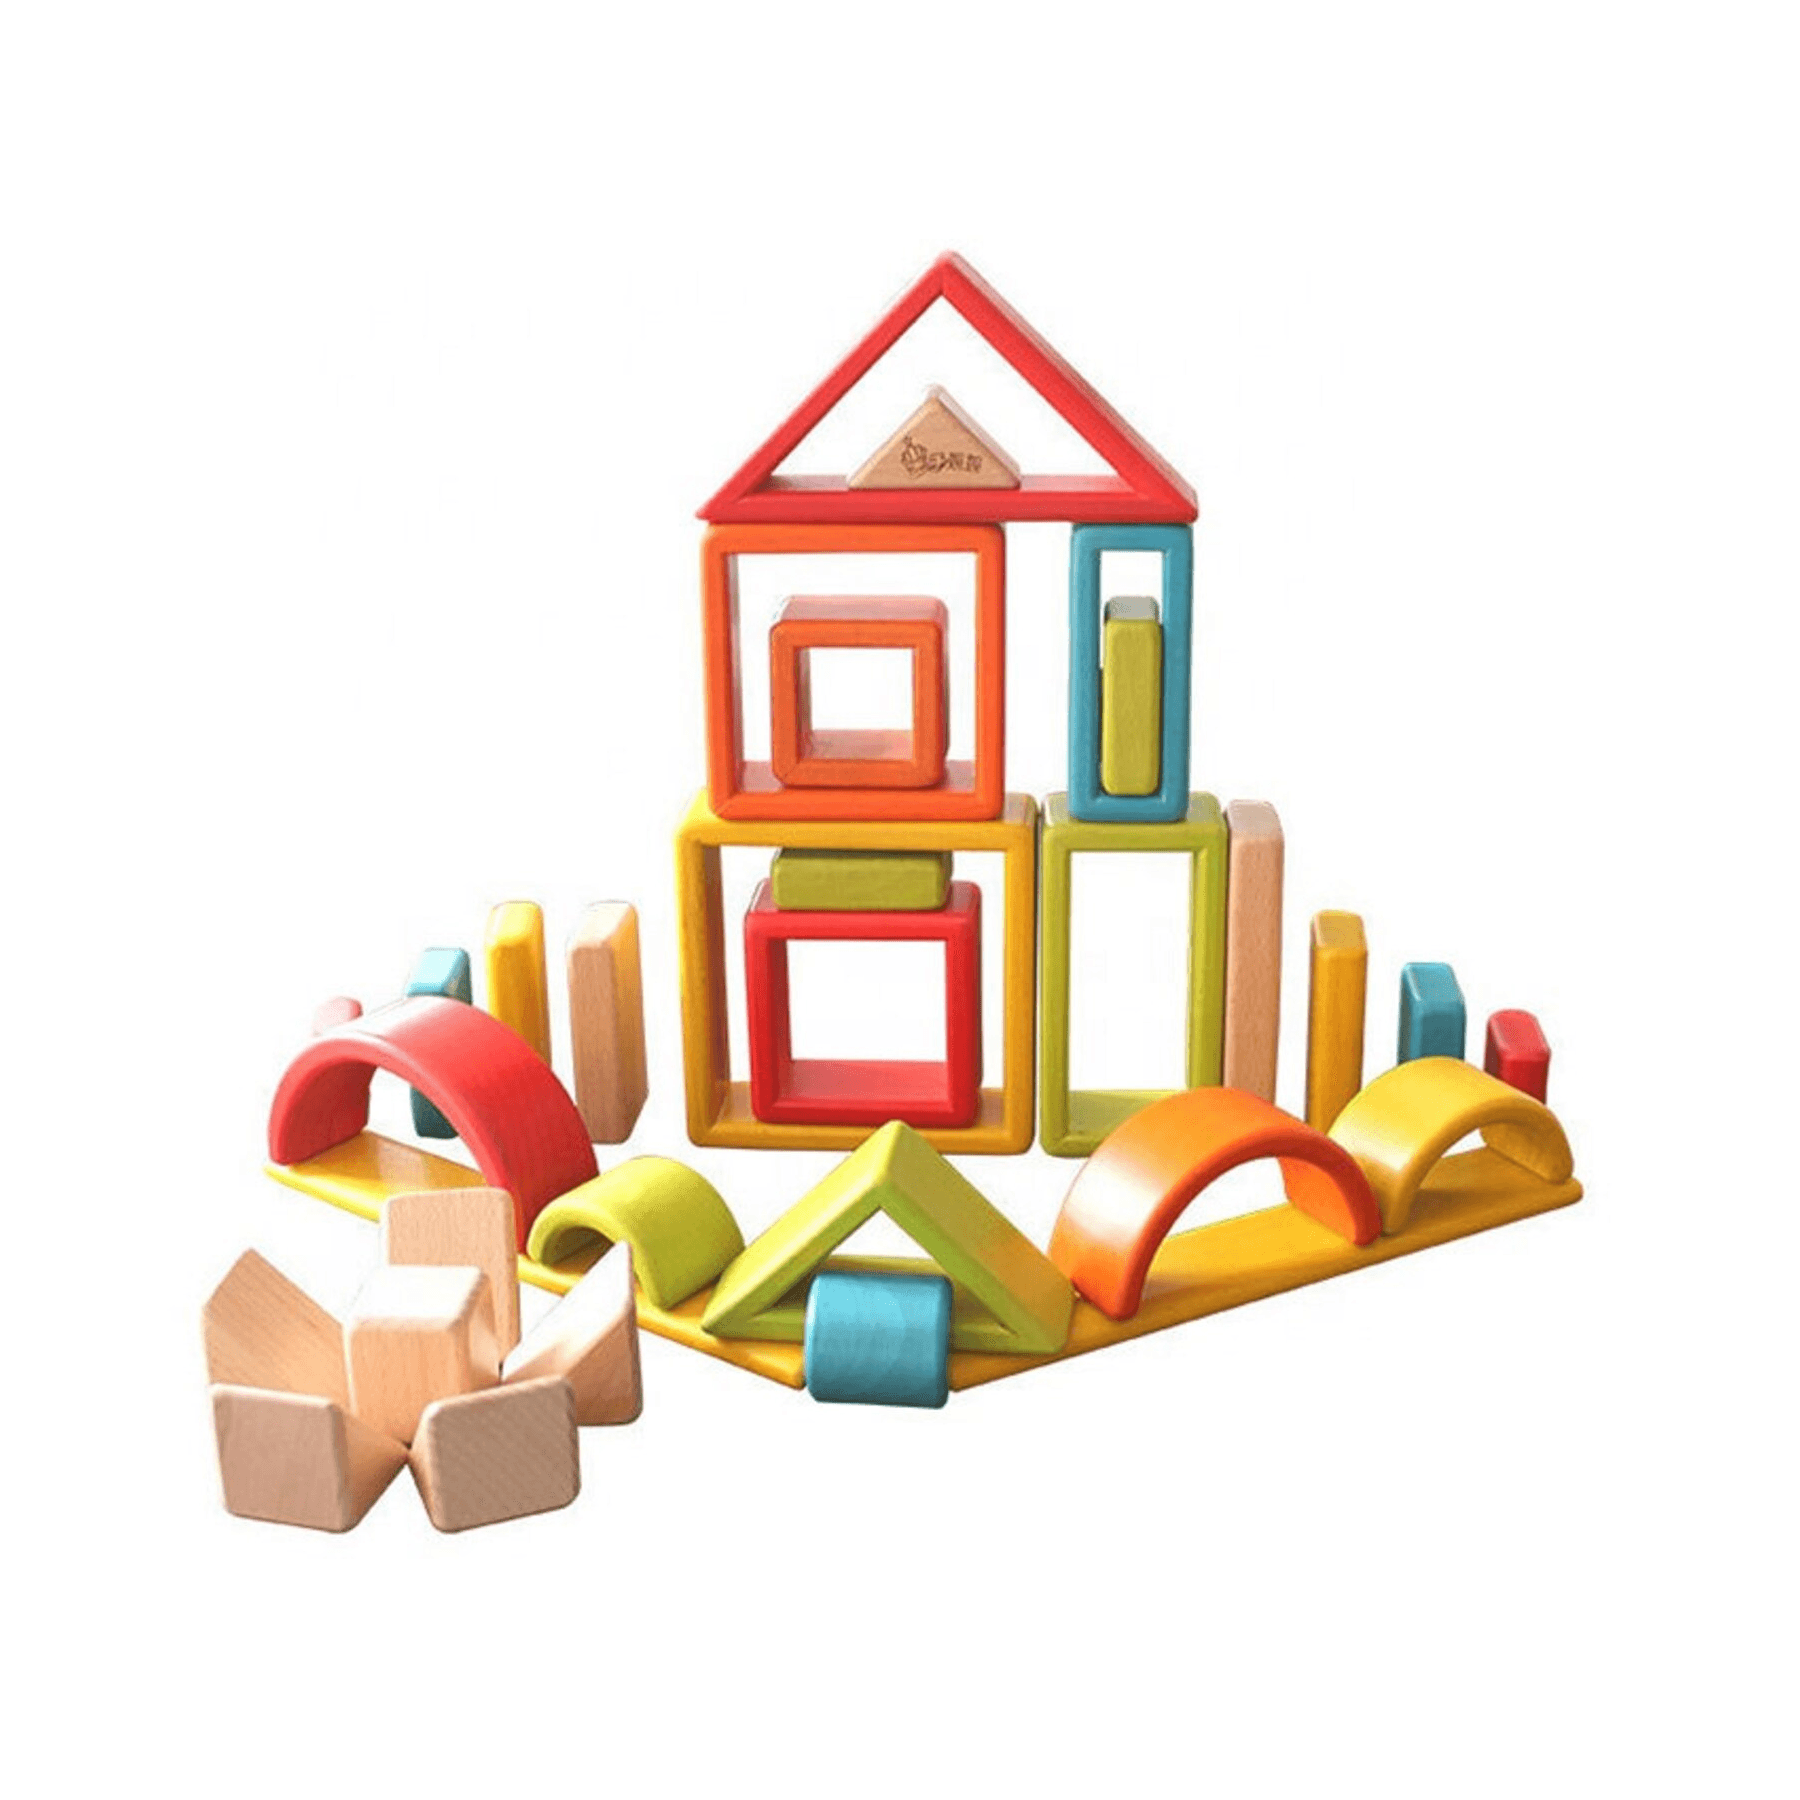 Montessori moderngenic Wooden Geometrical Building Blocks